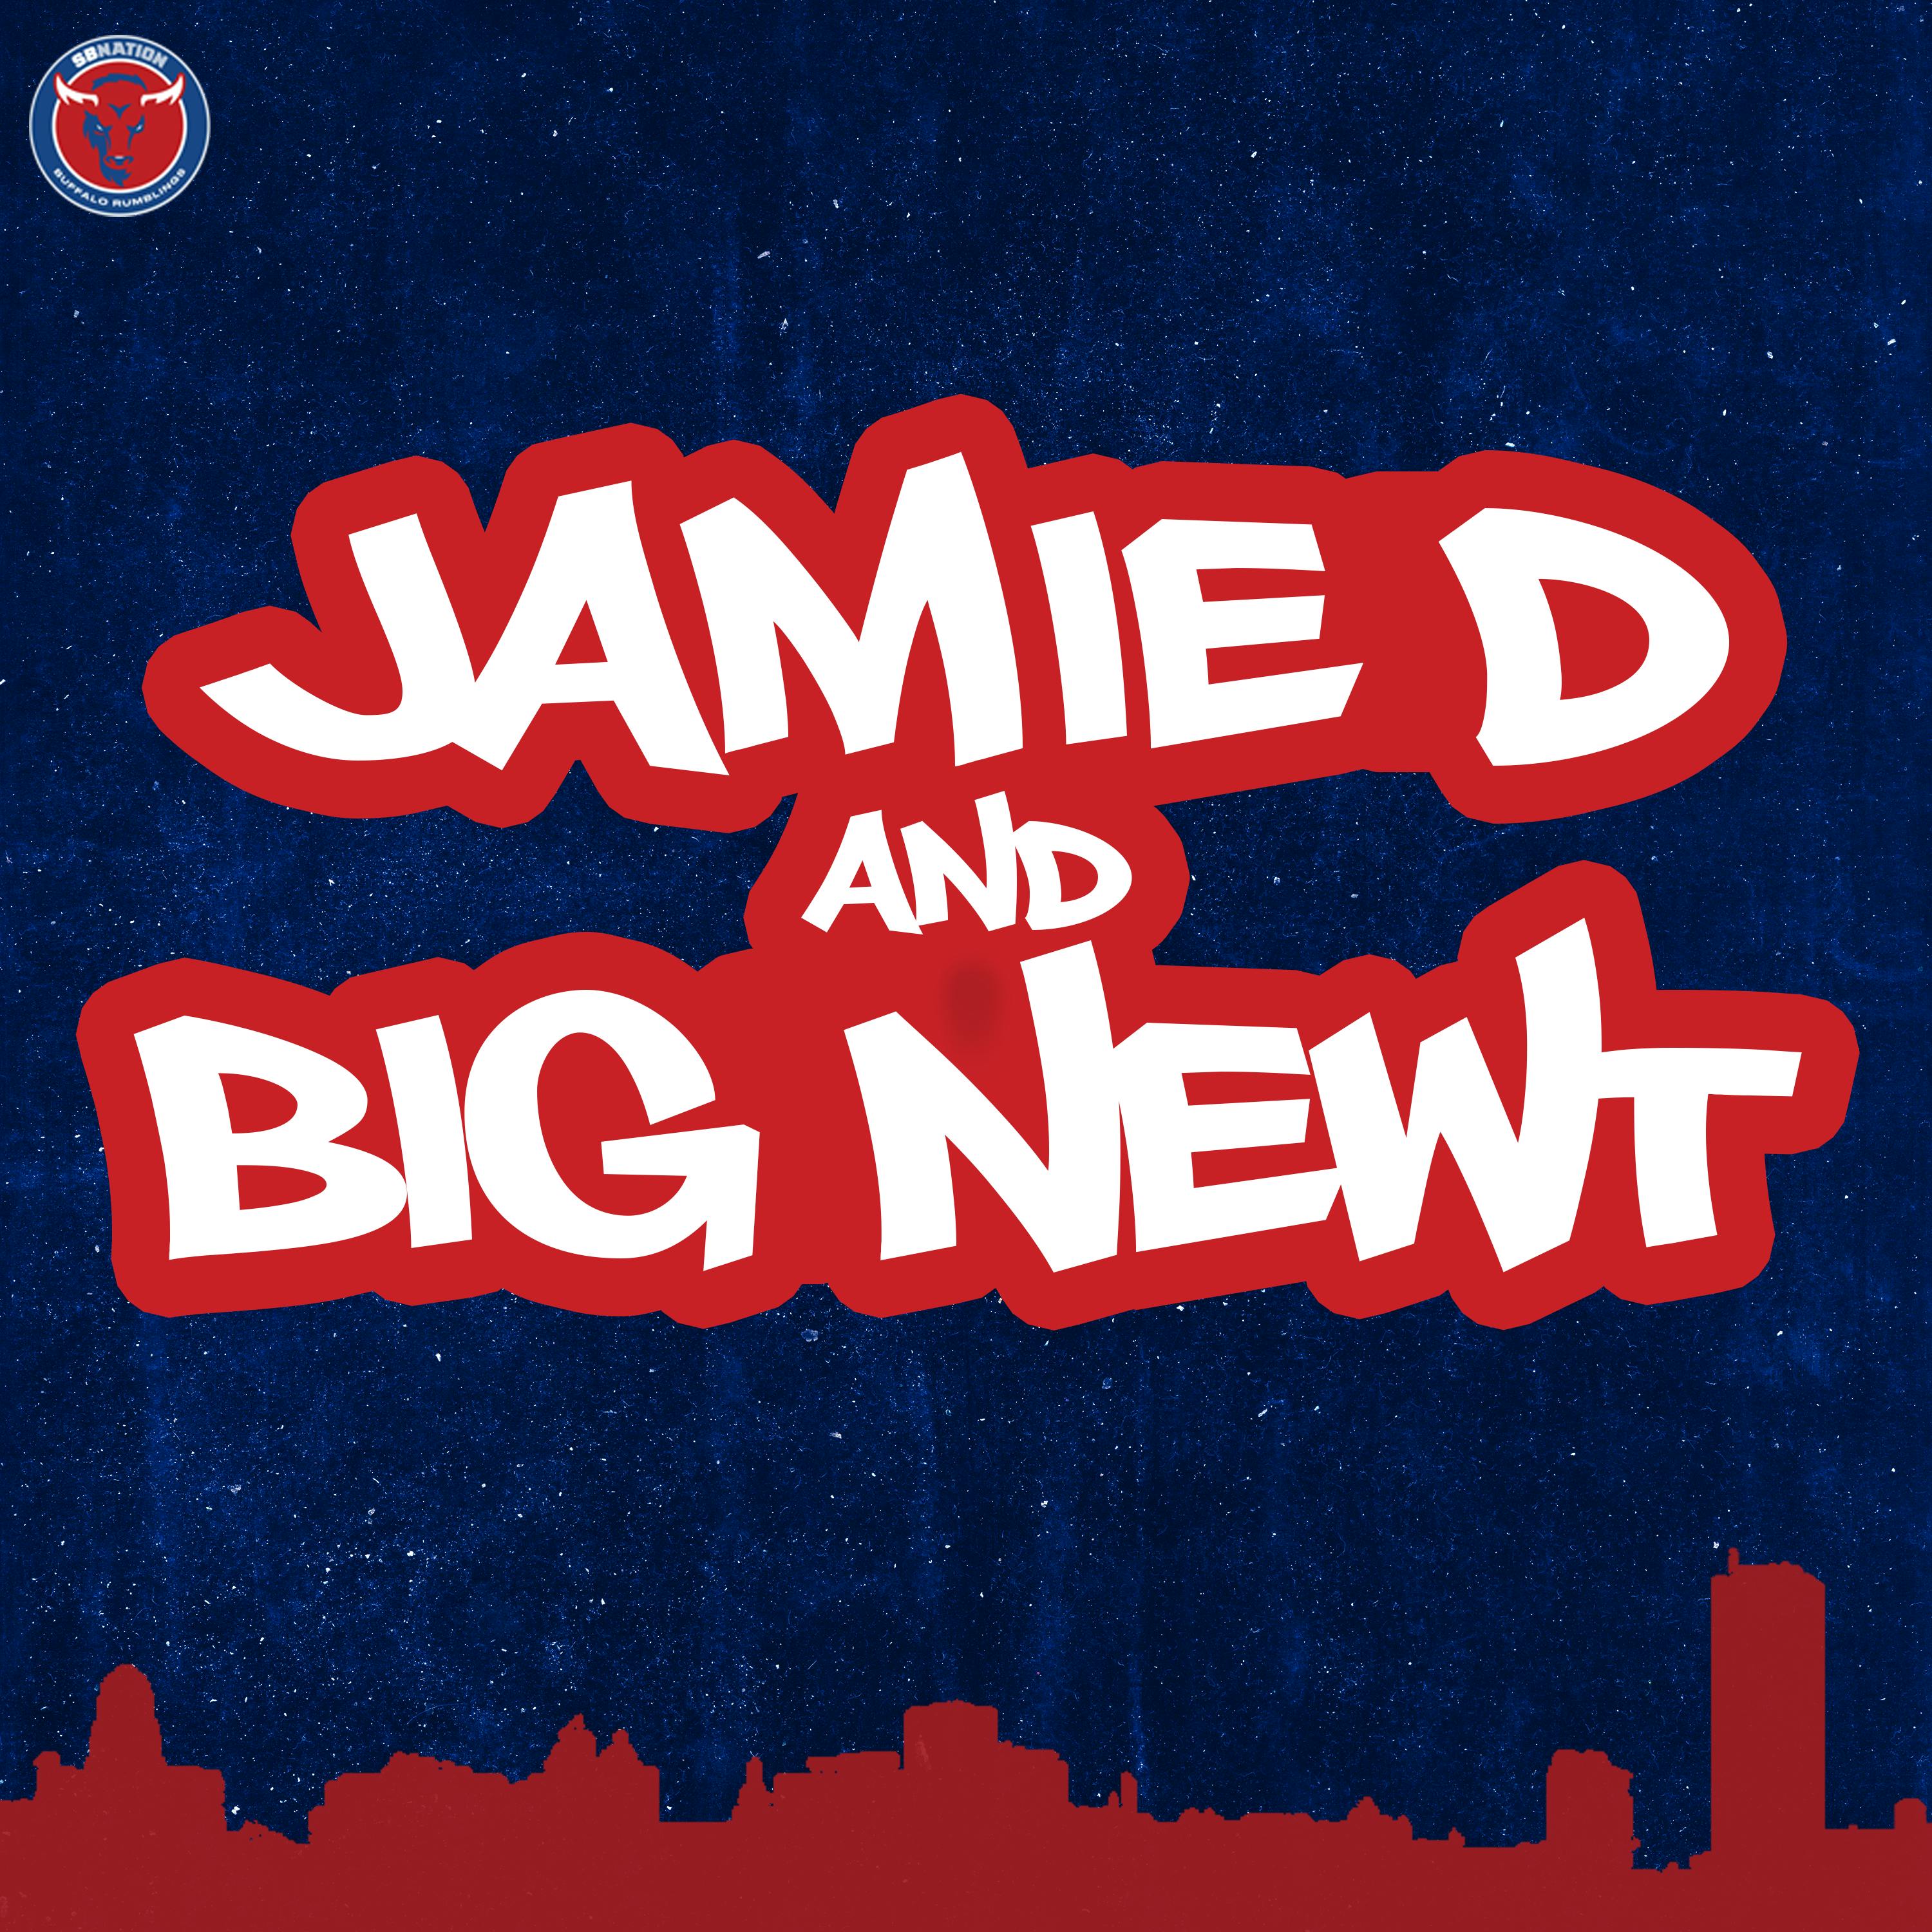 Jamie D & Big Newt: Bills on the rise